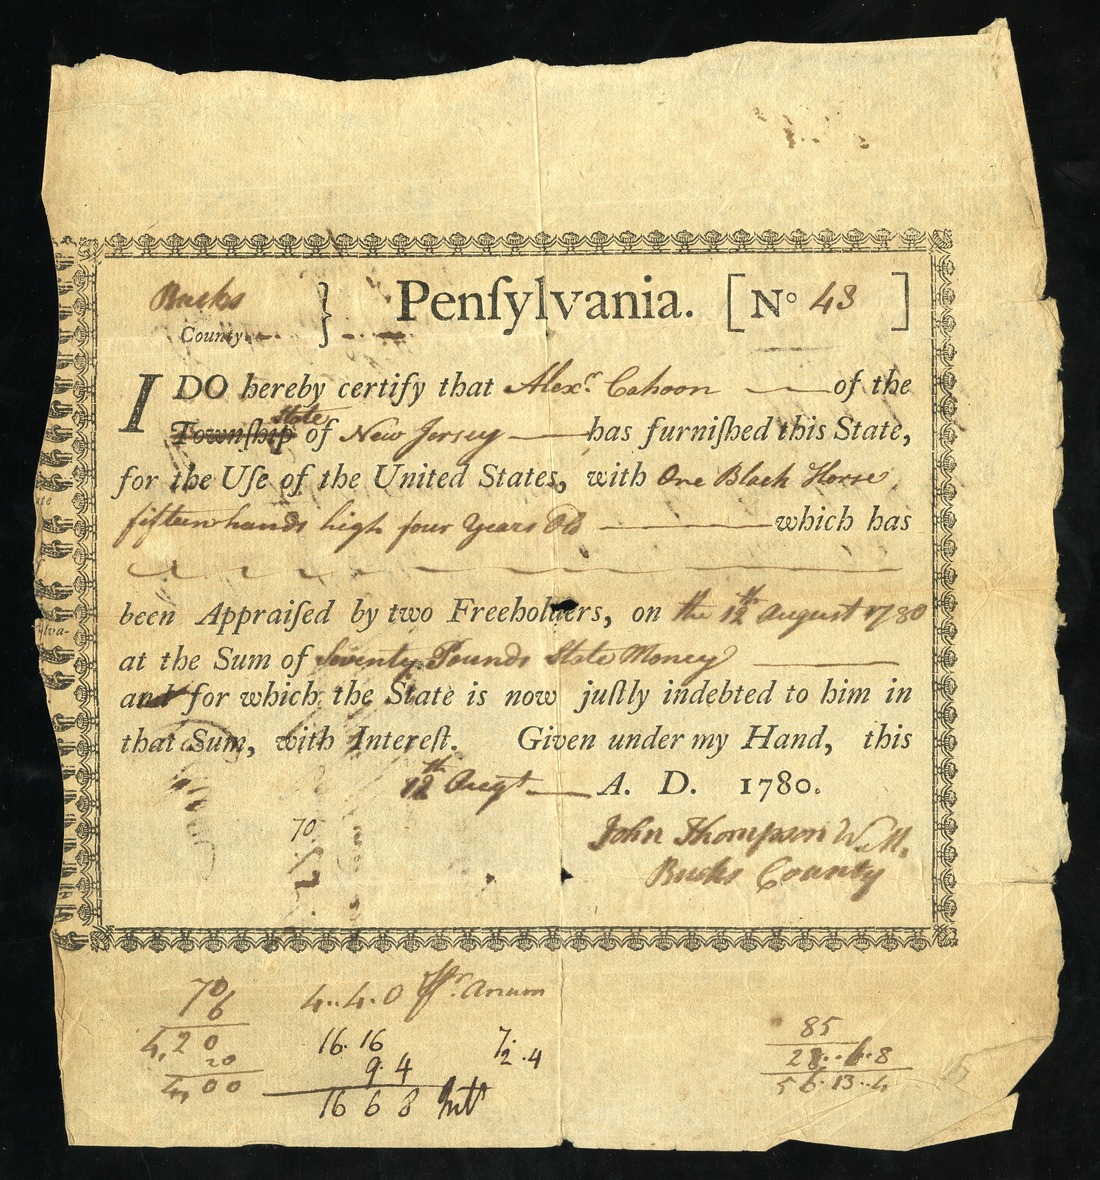 American Revolution; Bucks County, PA history. Printed Revolutionary War Bond, receipt No. 48 from